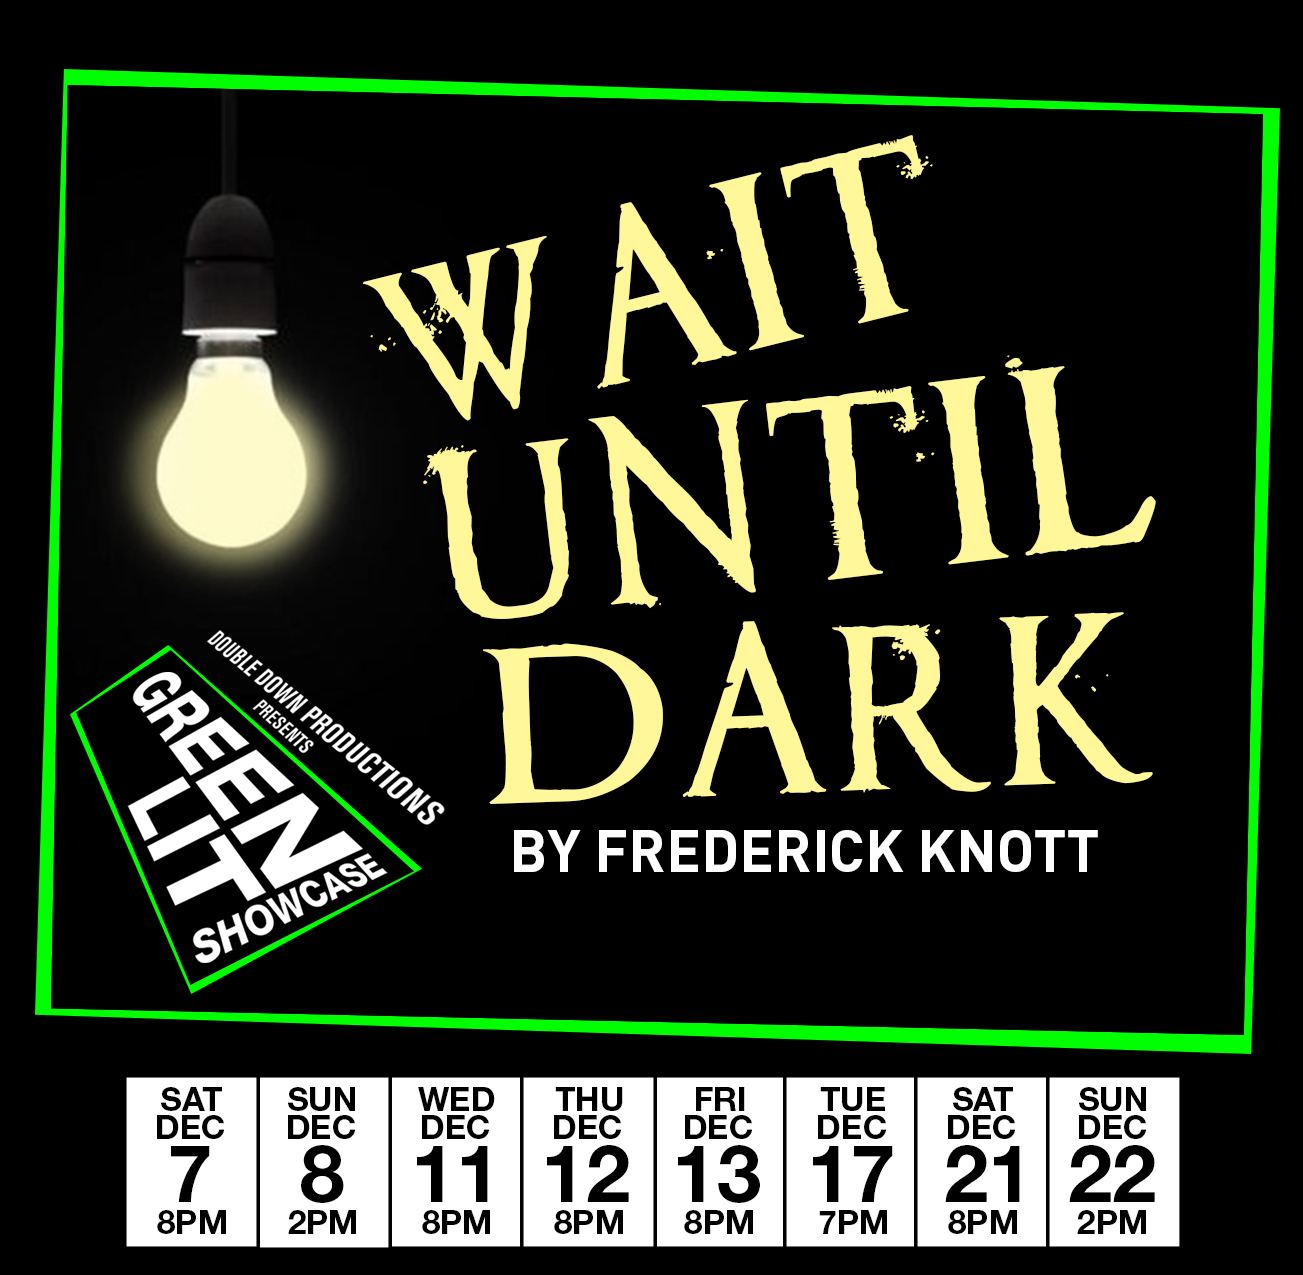 Wait Until Dark - Fri Dec 13th